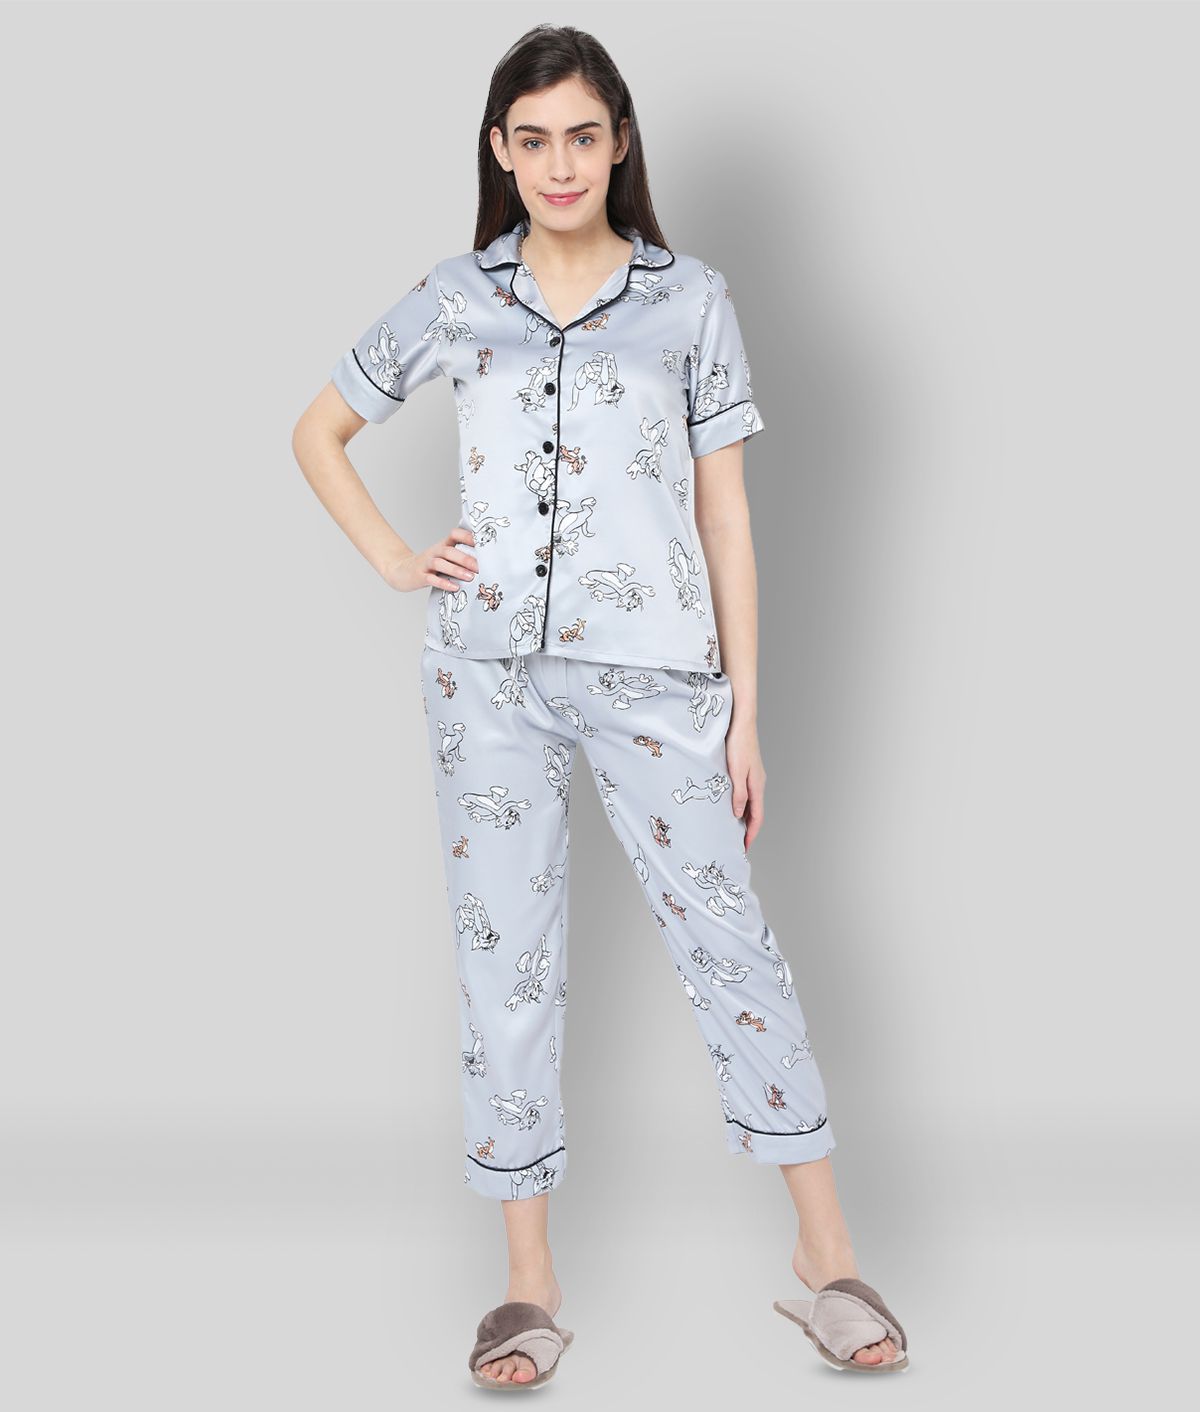     			Smarty Pants - Light Grey Satin Women's Nightwear Nightsuit Sets ( Pack of 1 )